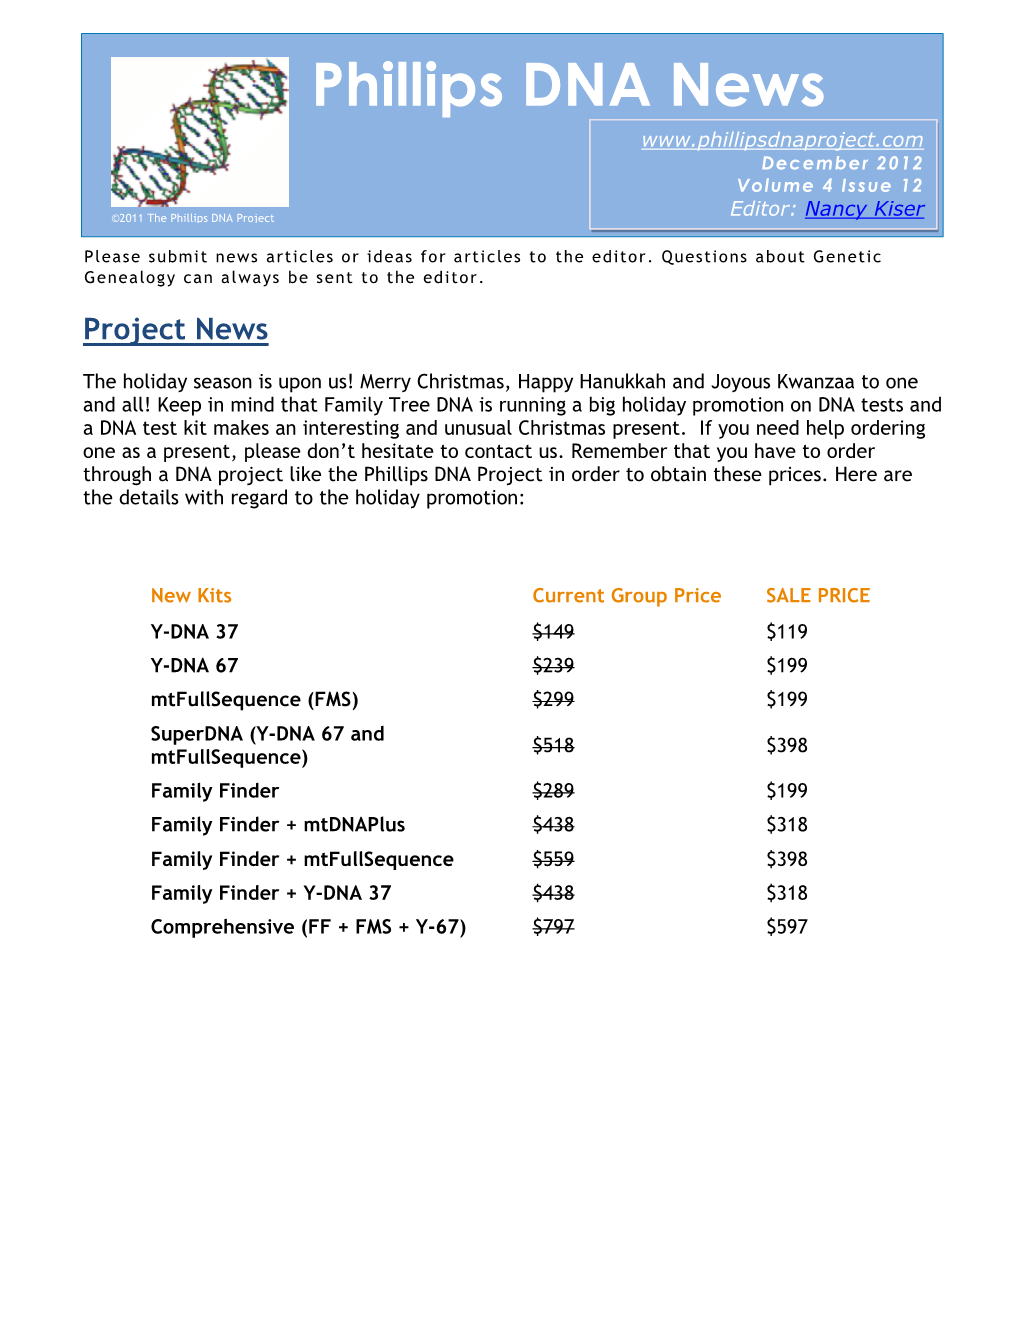 Phillips DNA News December 2012 Volume 4 Issue 12